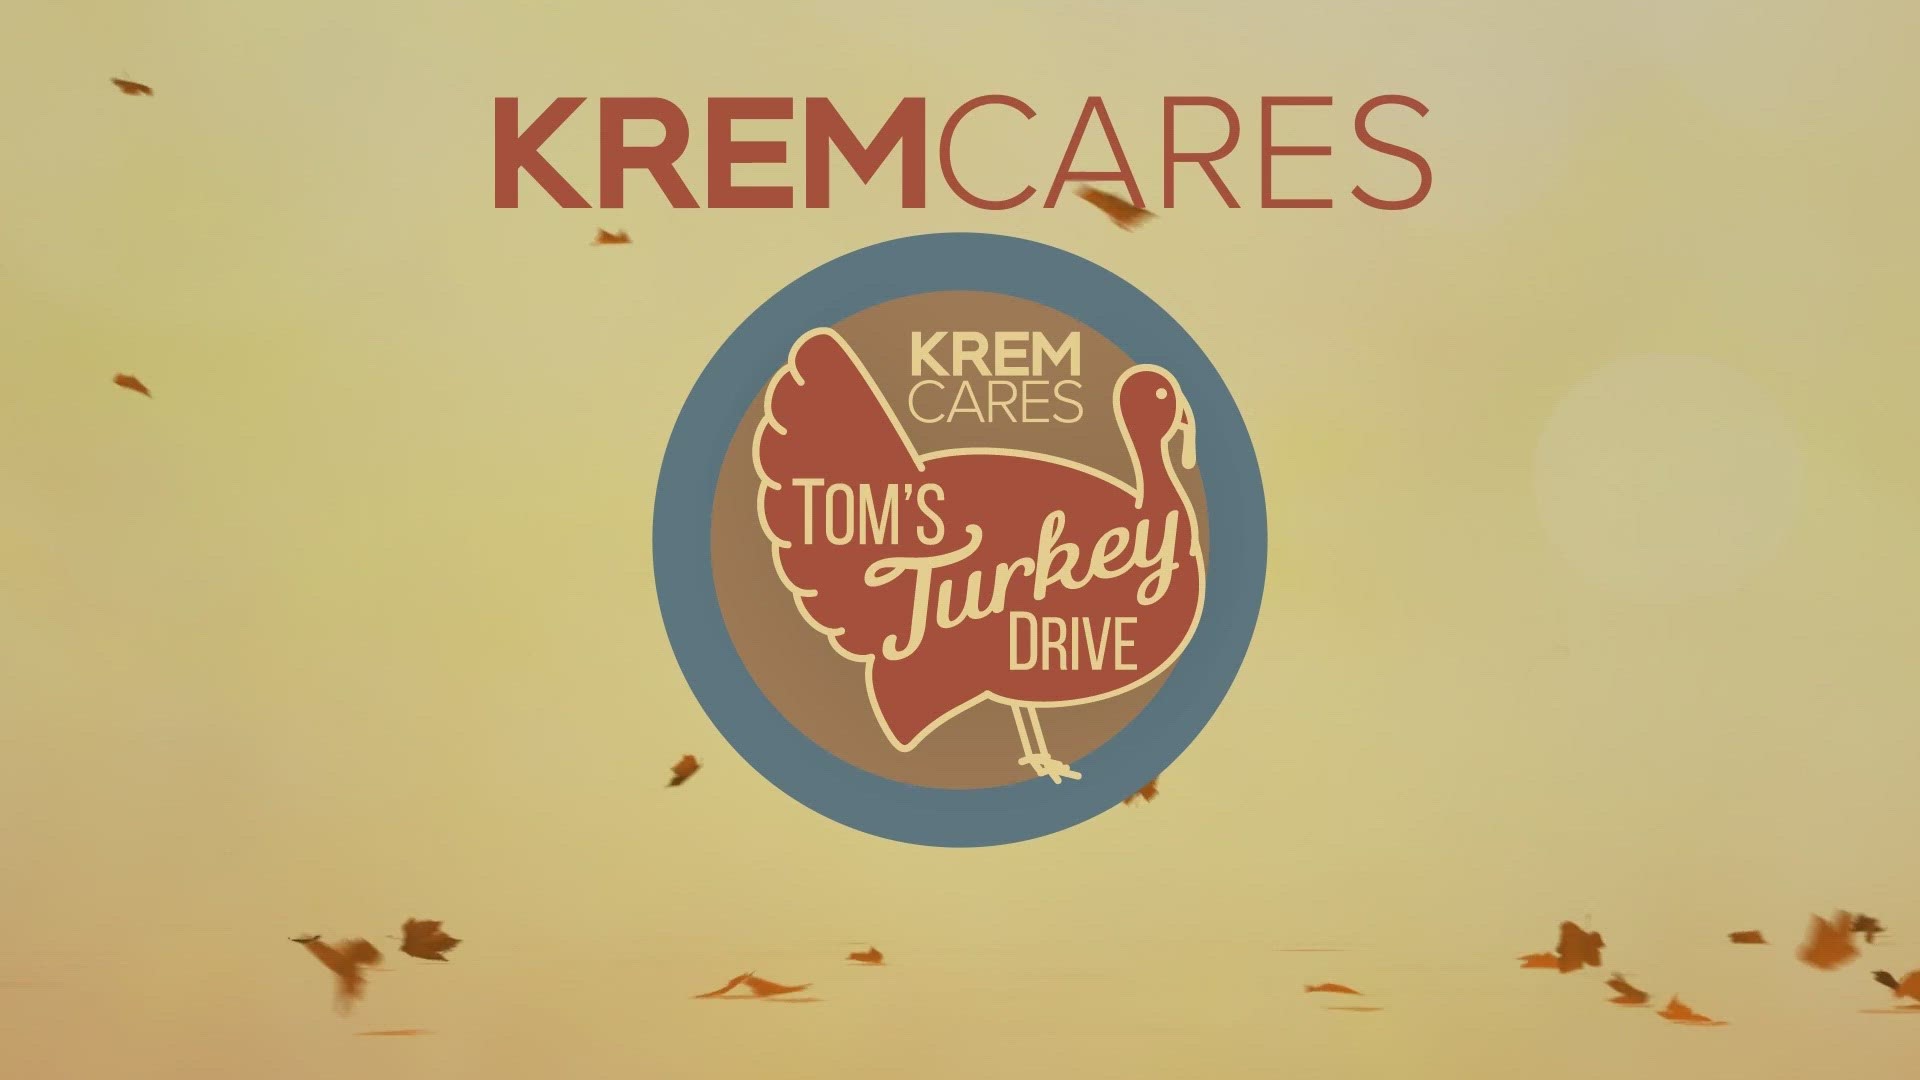 Post
See new posts
Conversation
KREM 2 NEWS
@KREM2
The KREM Cares team & Second Harvest want to thank everyone who got involved with Tom's Turkey Drive.